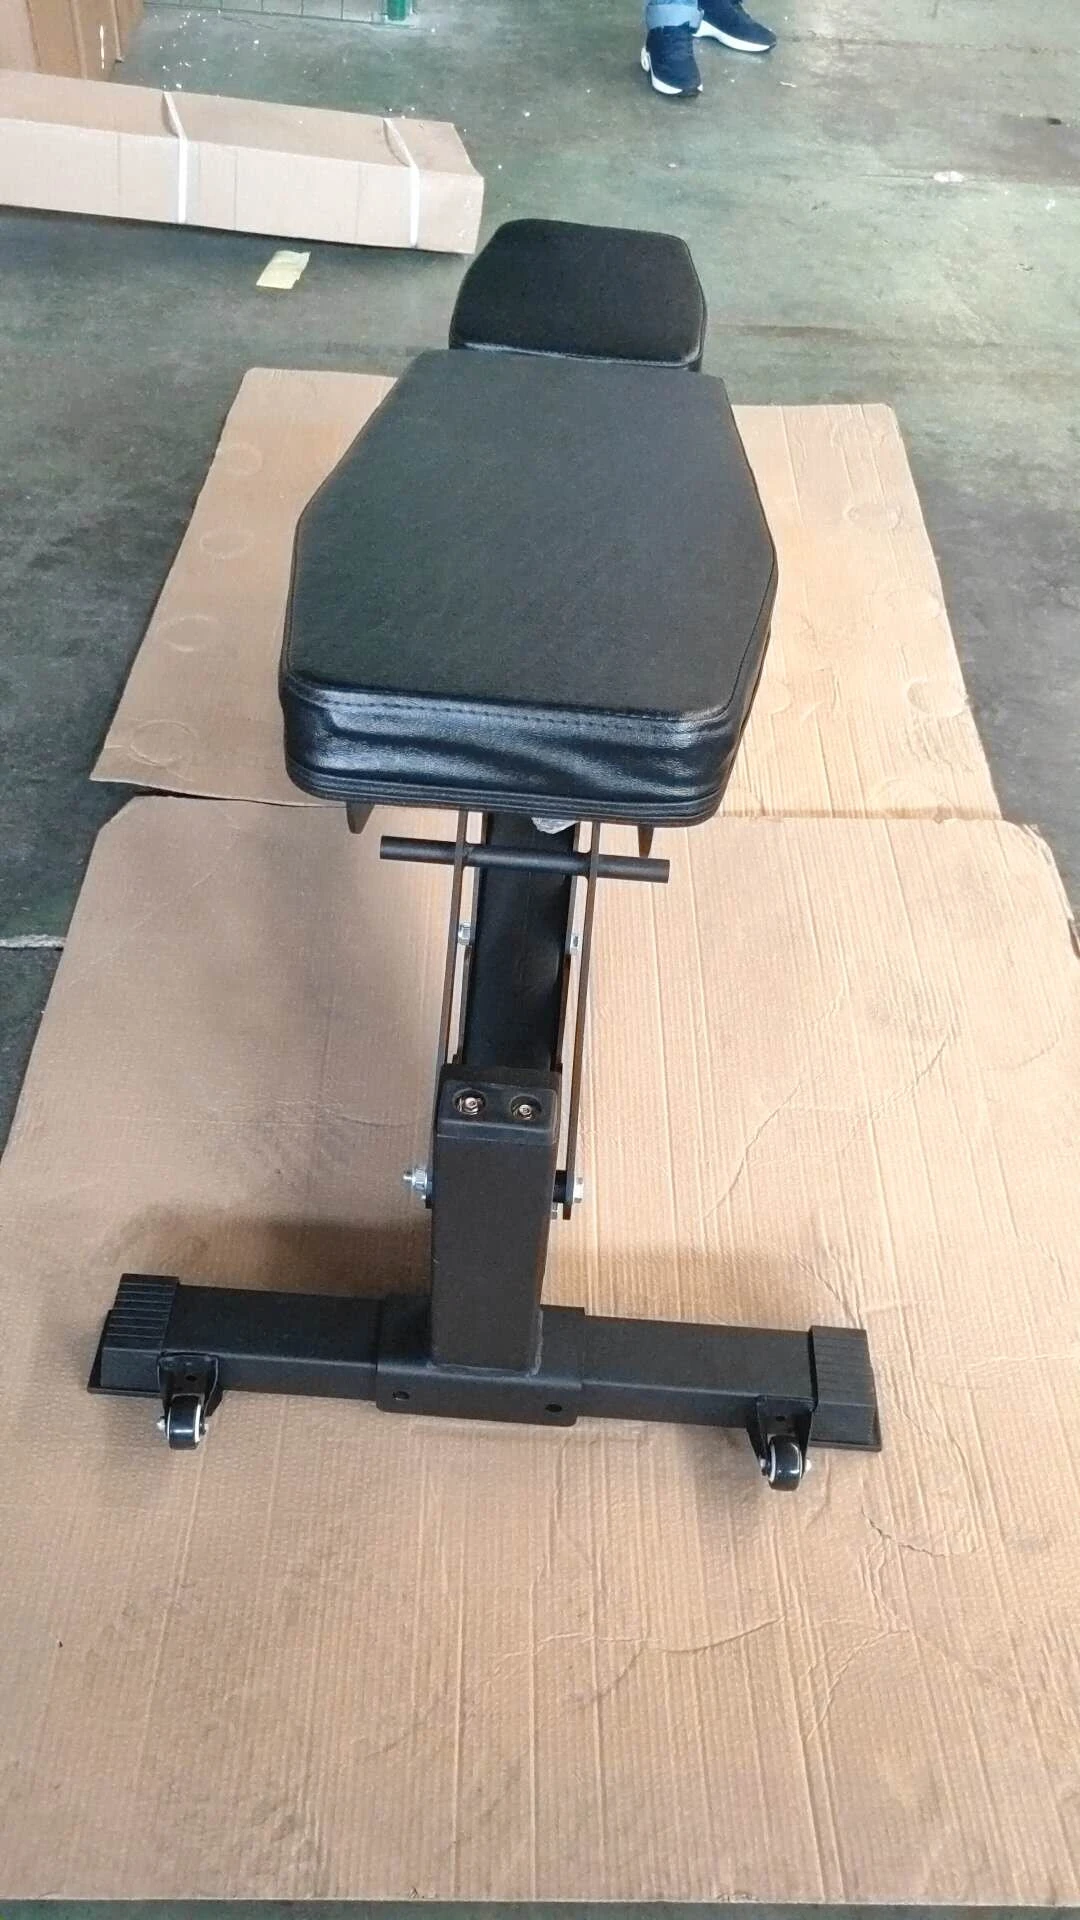 Gym flat weight bench